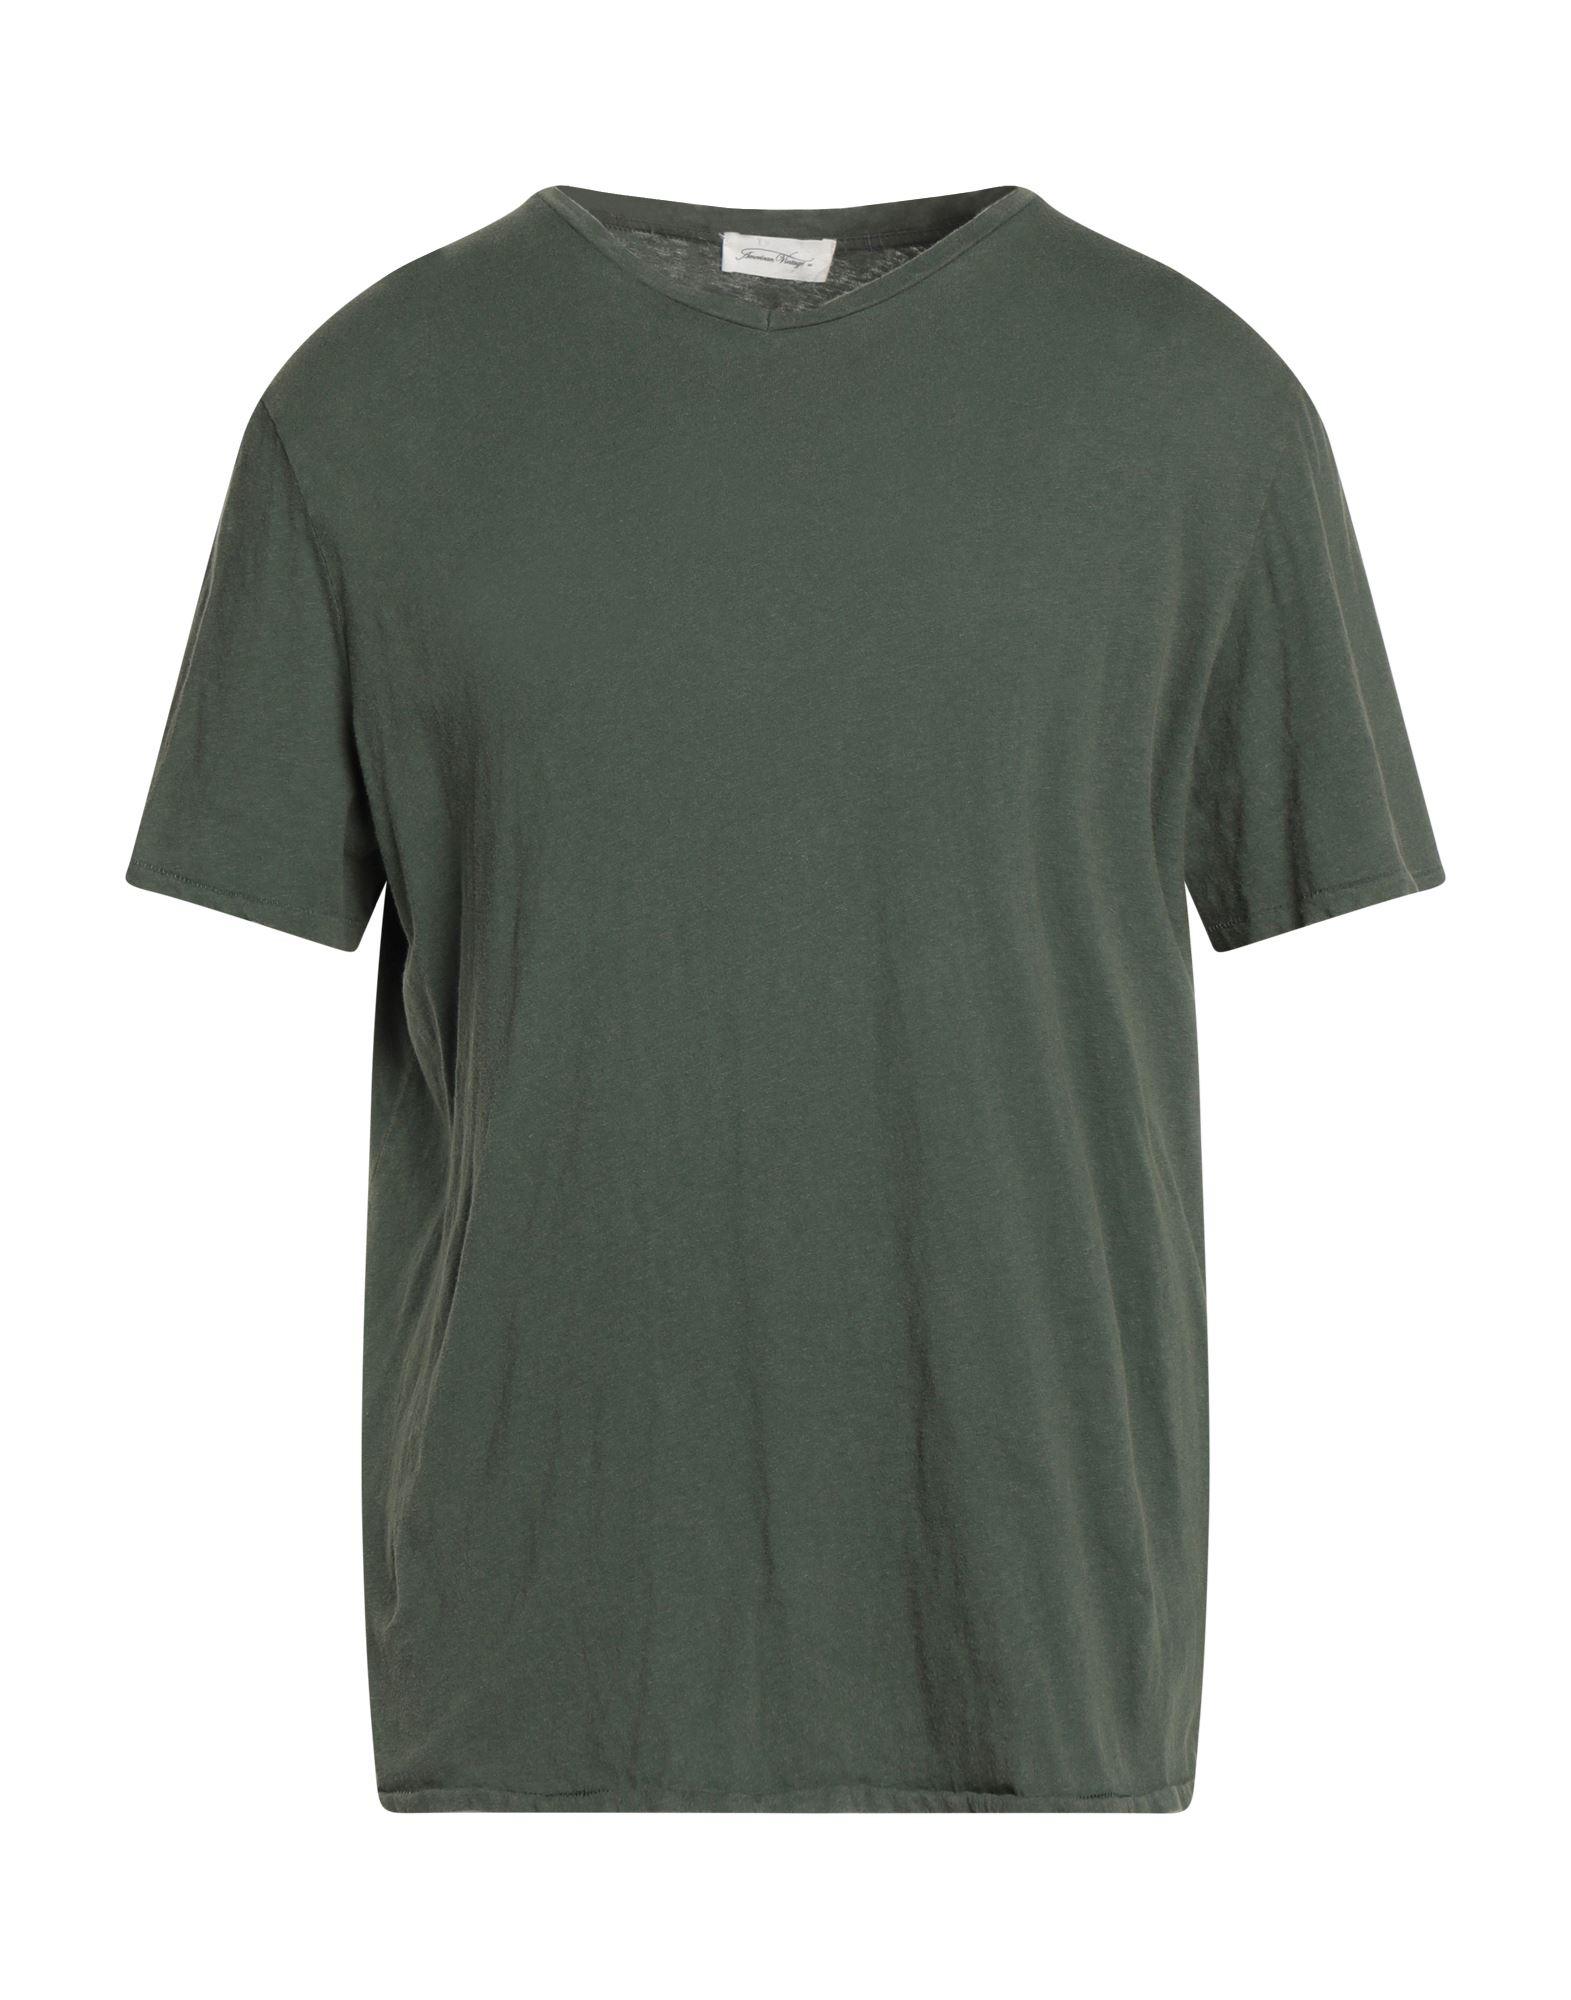 American Vintage Men's T-Shirt - Green - M